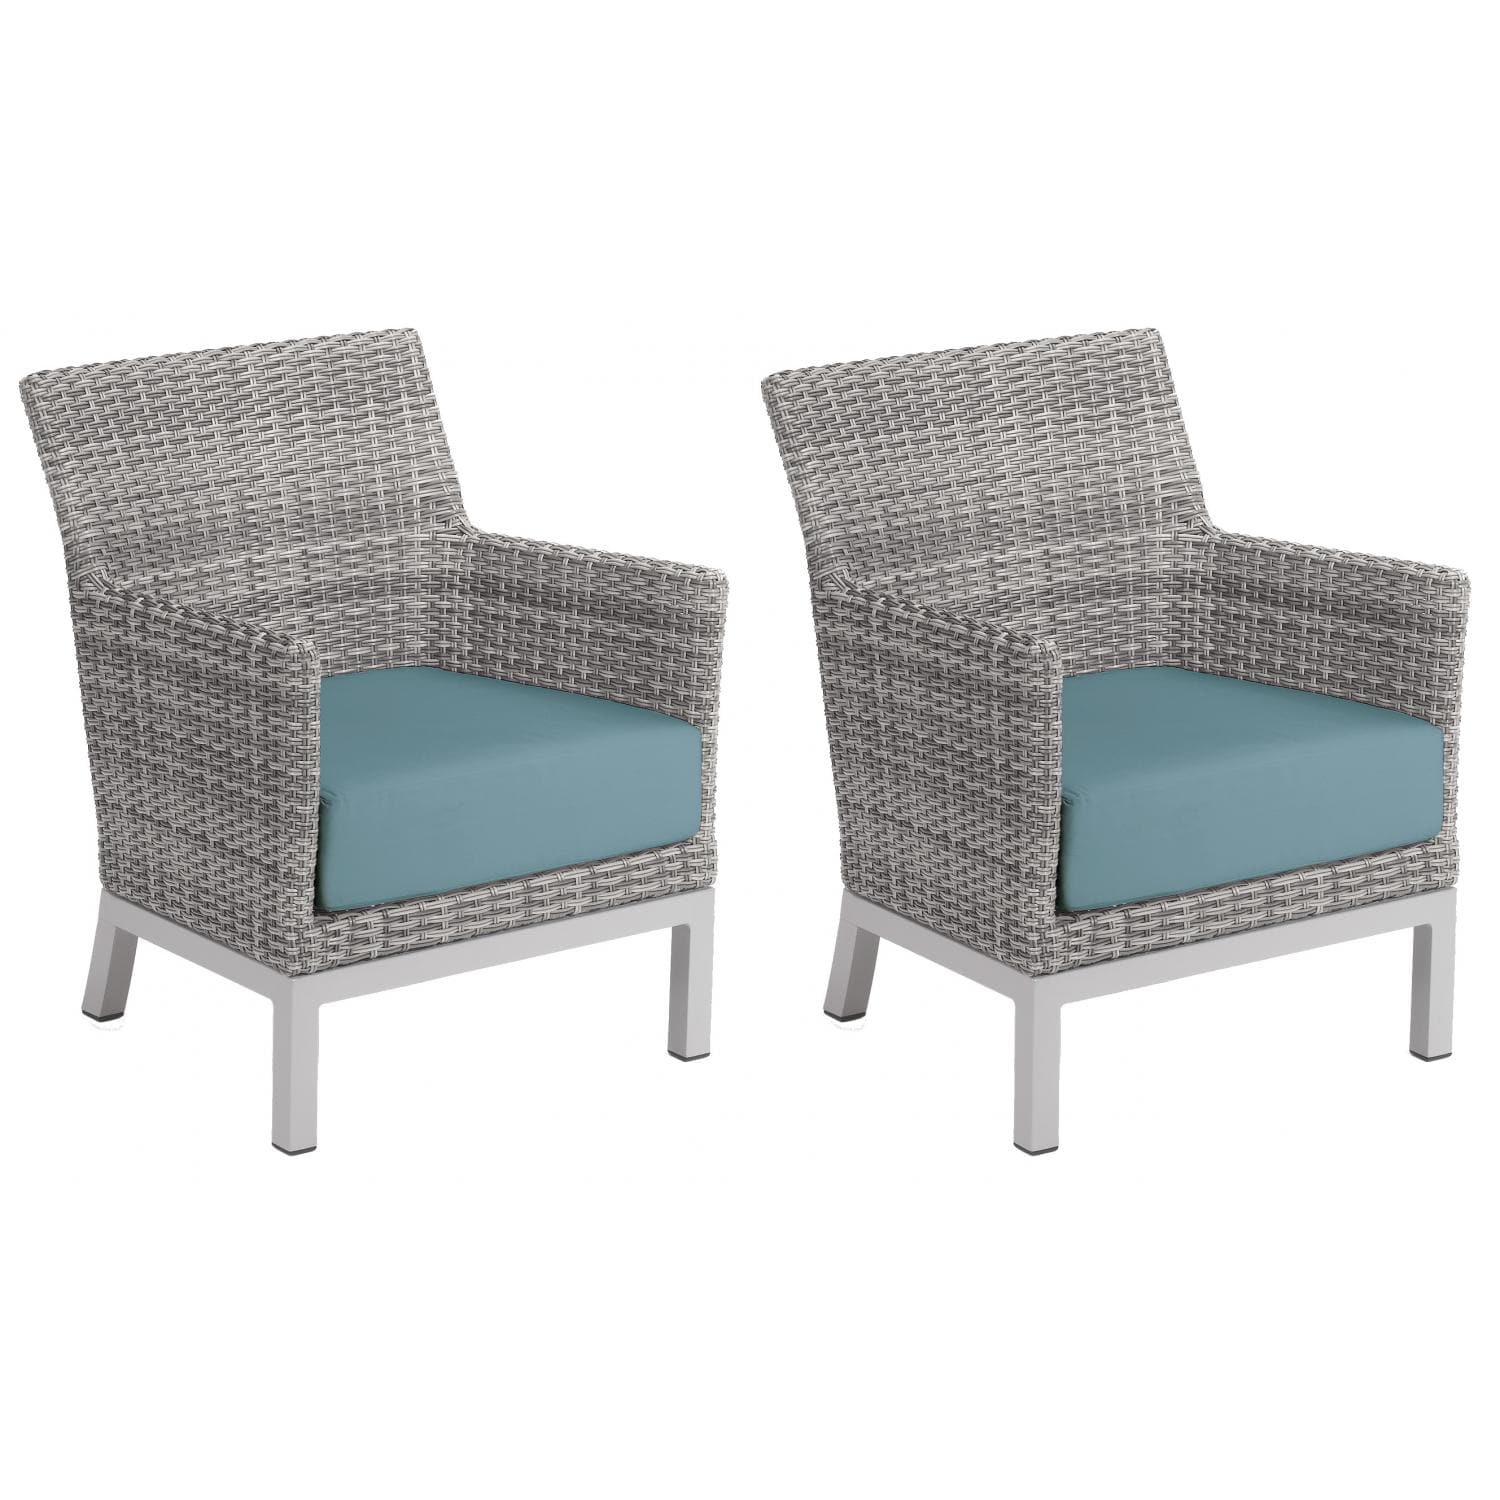 Argento 2 Piece Wicker Patio Club Chair Set W/ Ice Blue Cushions By Oxford Garden - image 1 of 4